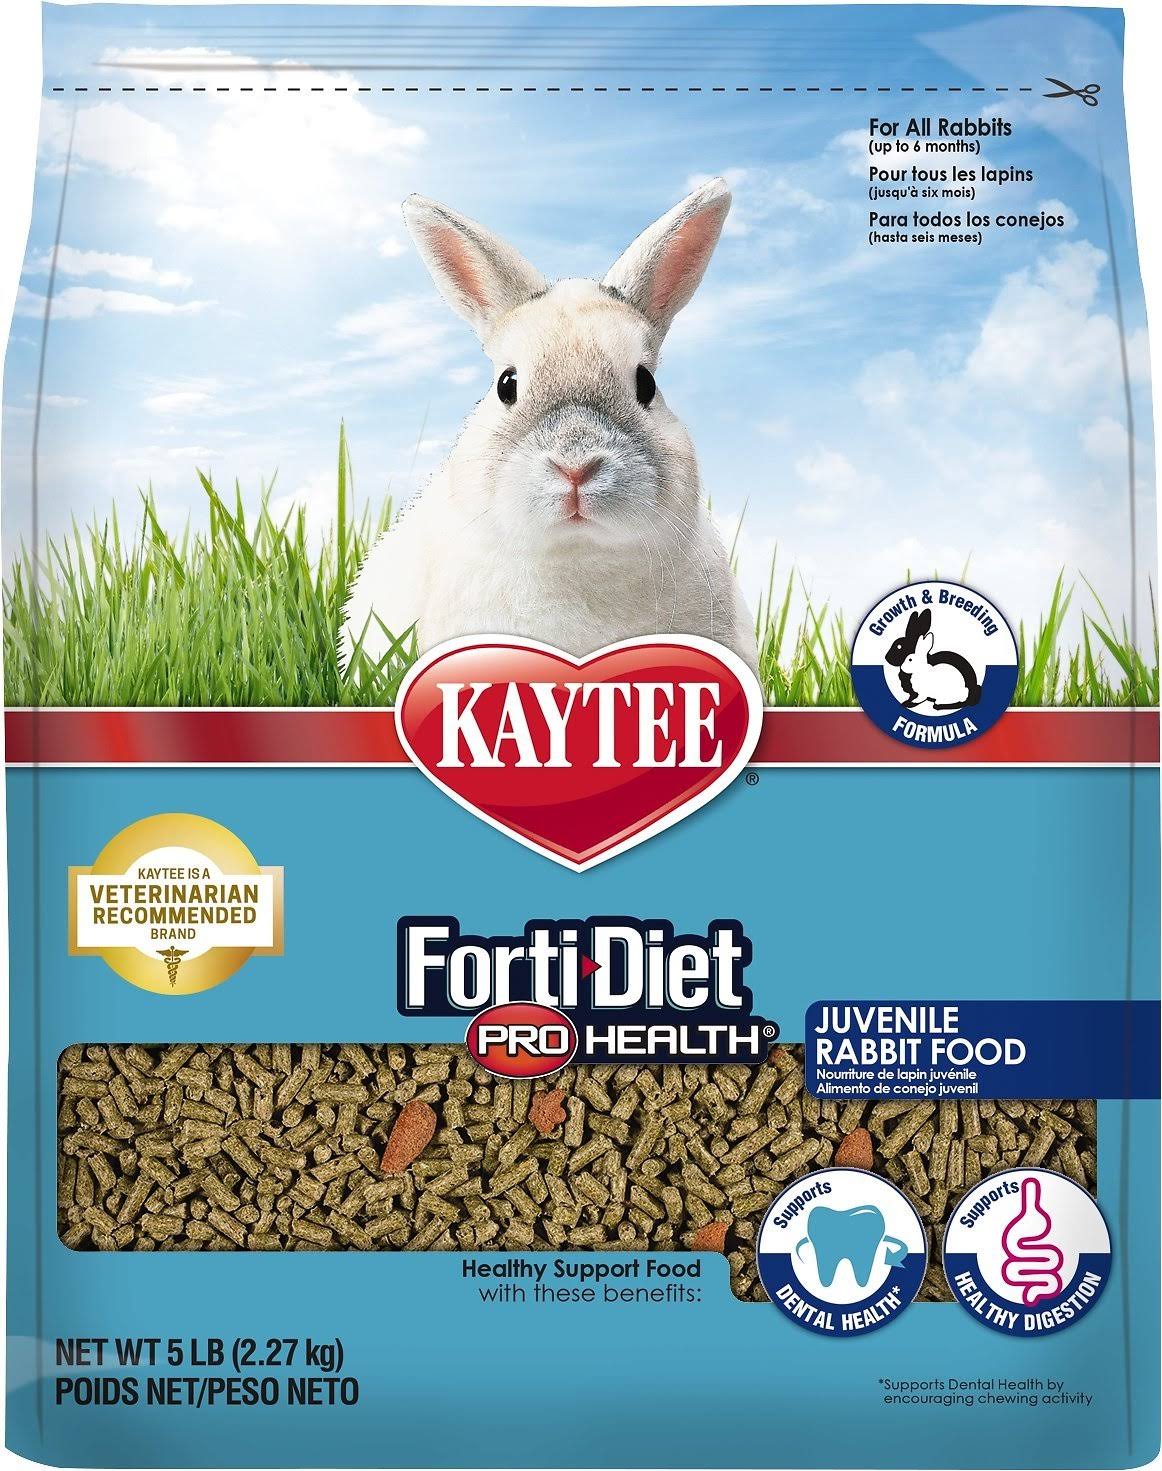 Kaytee Prohealth Juvenile Rabbit Food - 5lbs